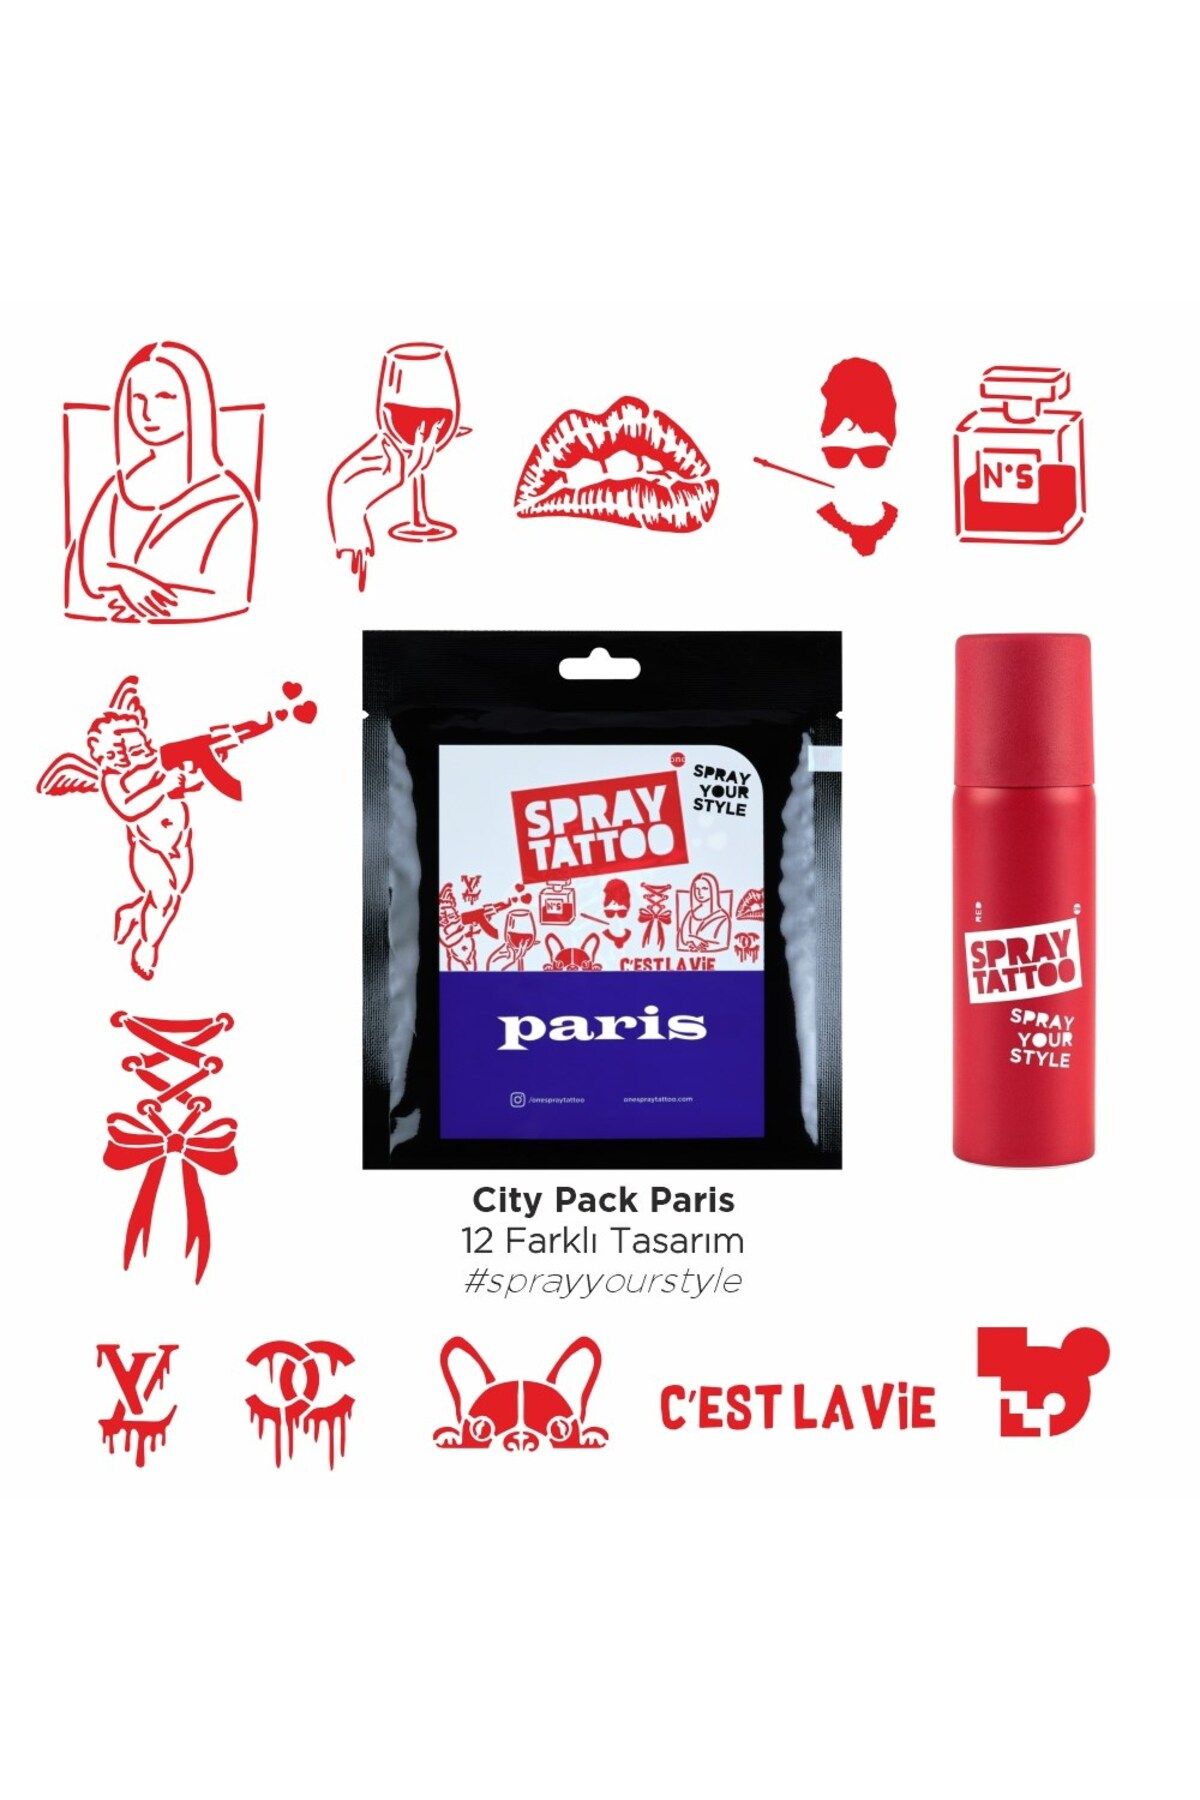 One Spray Tattoo Paris City Pack Geçici Dövme ve Kırmızı Sprey